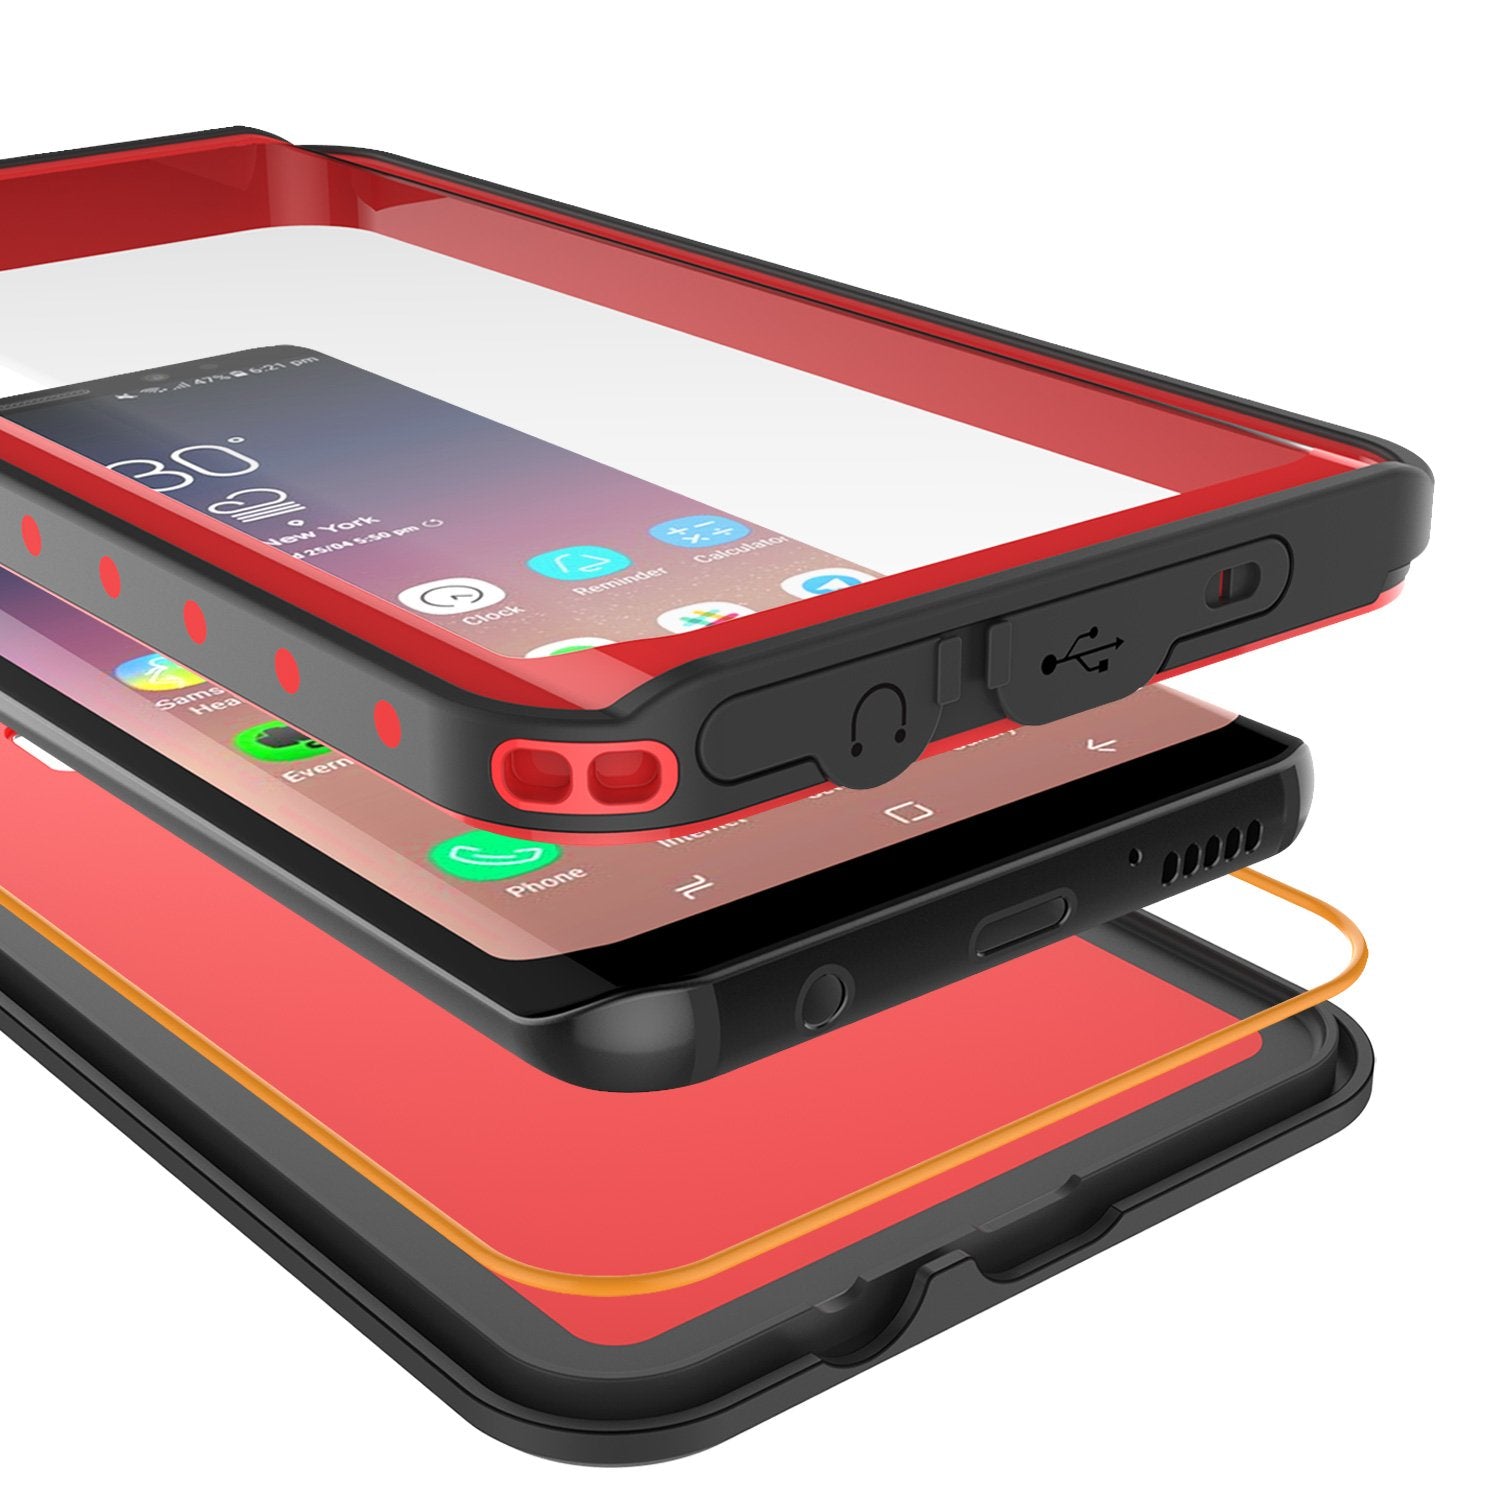 Galaxy S9 Waterproof Case PunkCase StudStar Red Thin 6.6ft Underwater IP68 Shock/Snow Proof